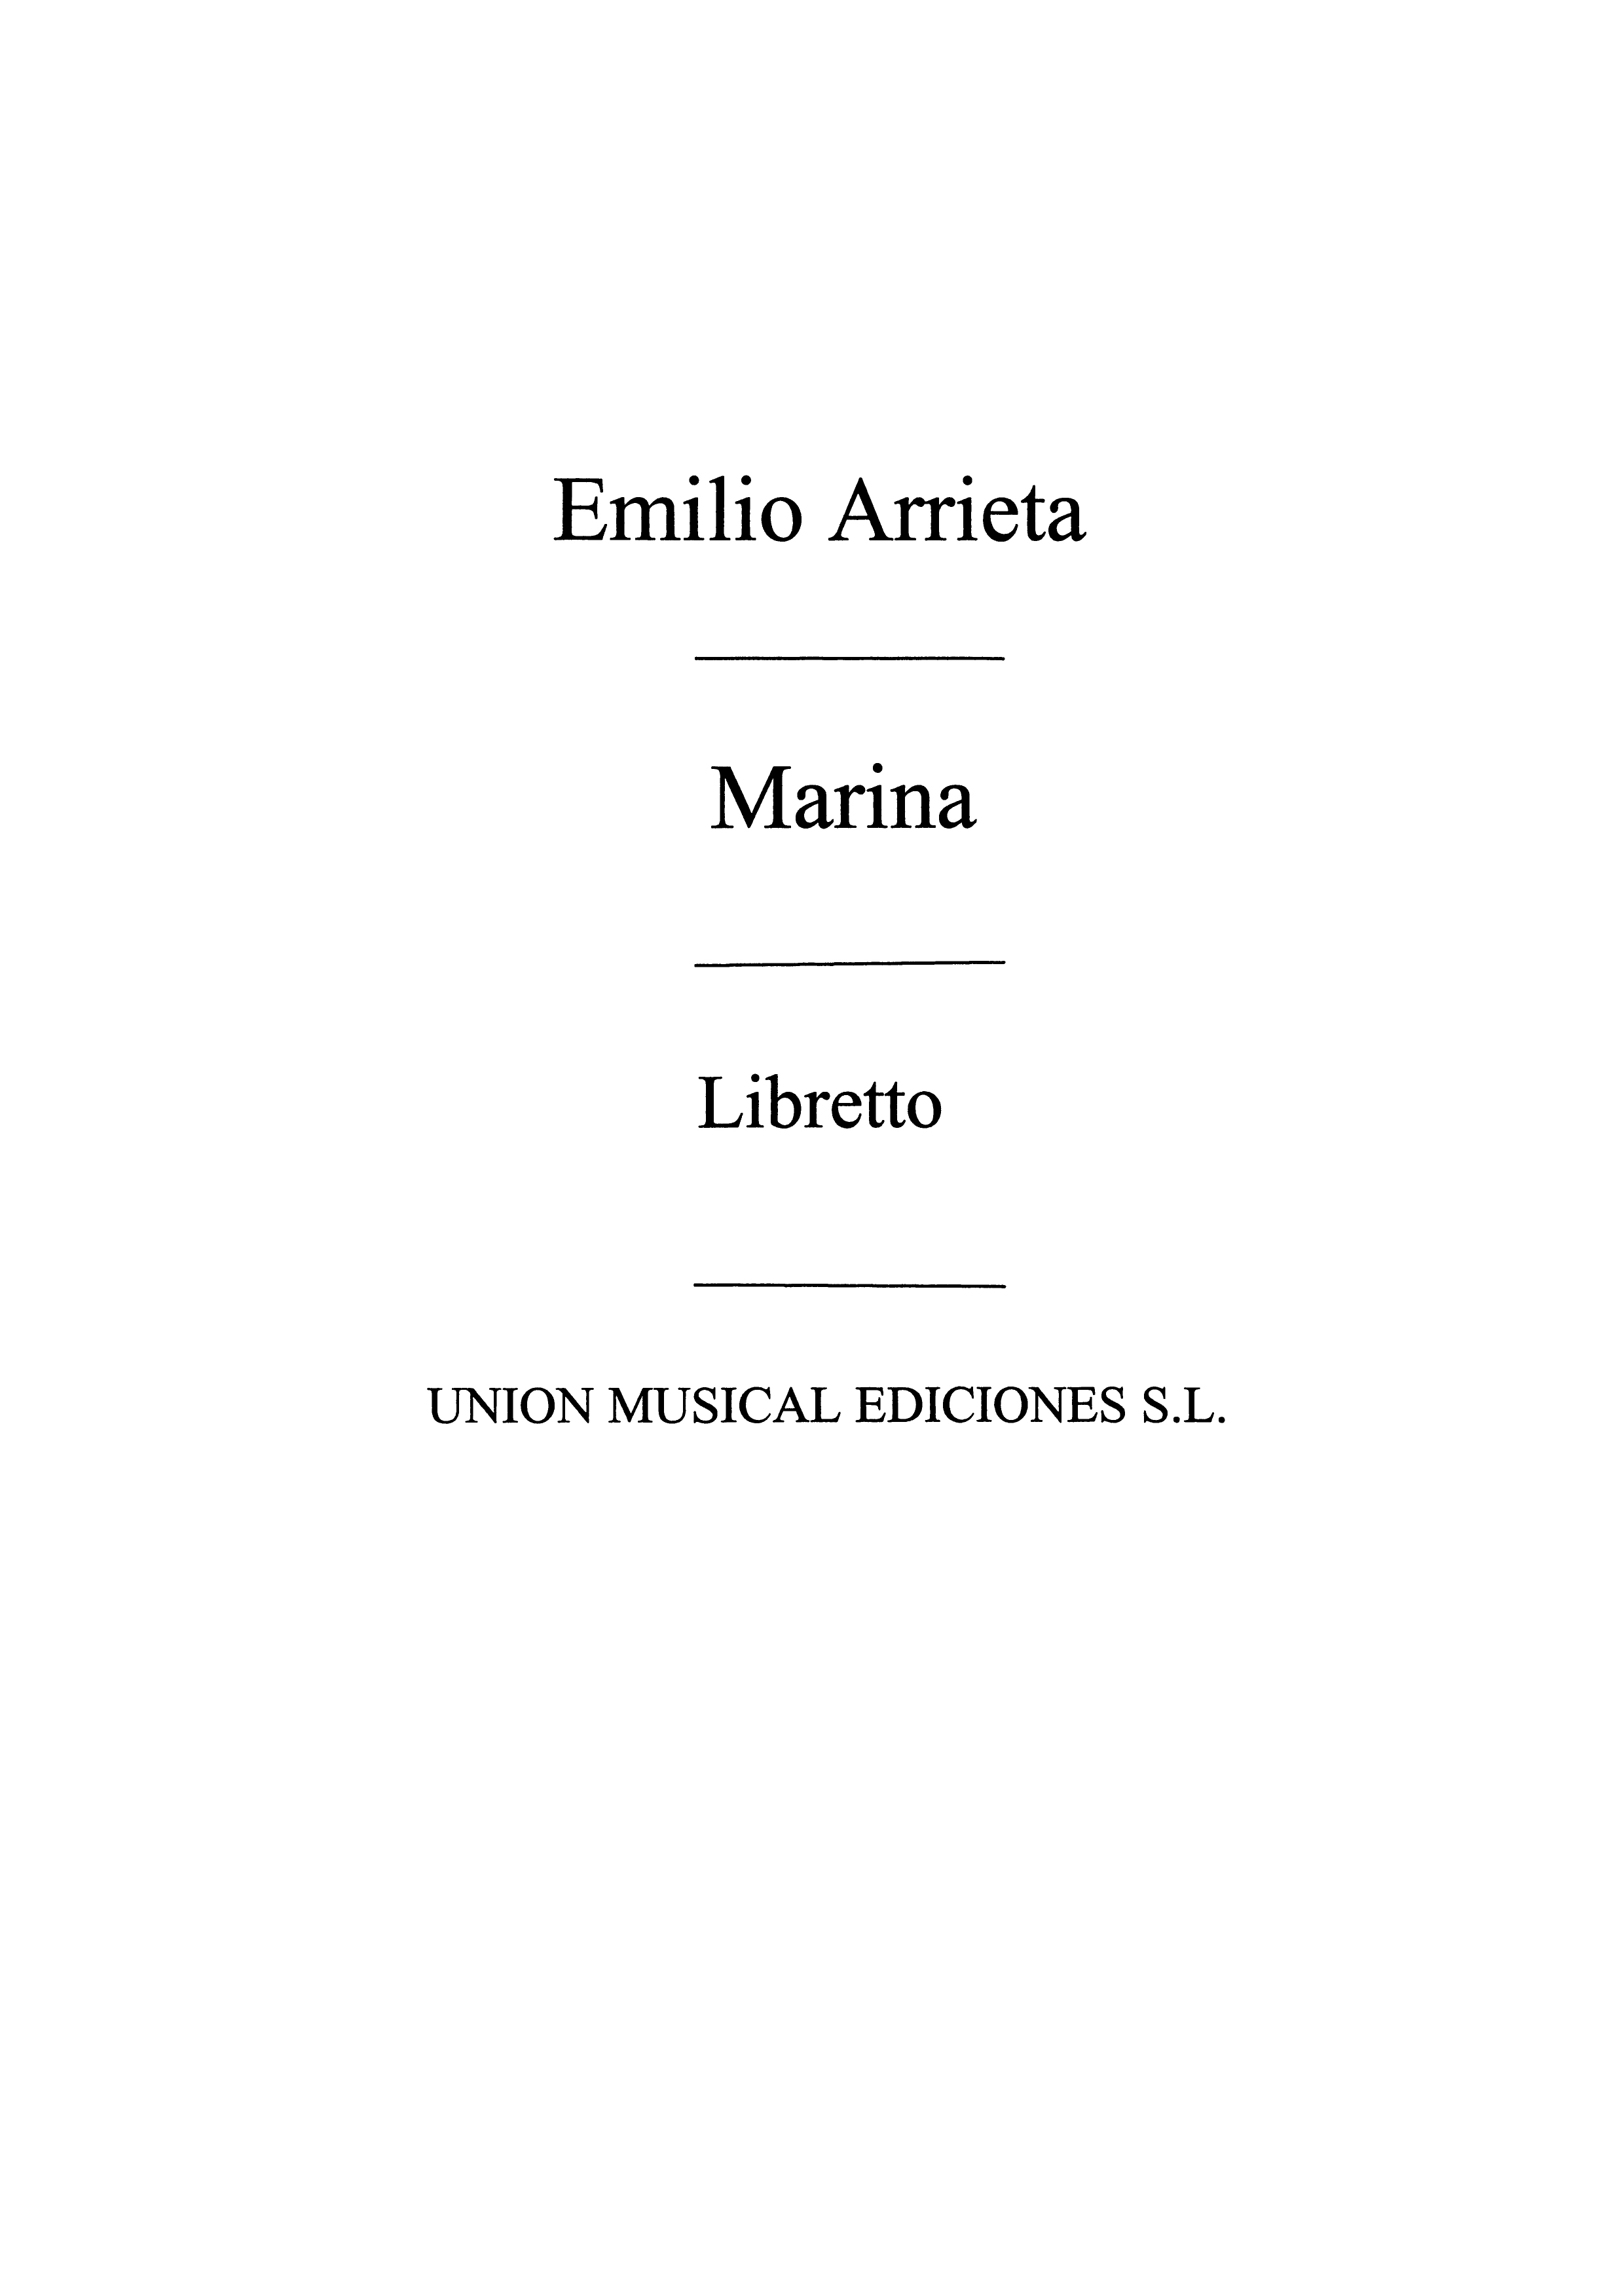 Emilio Arrieta: Marina - Libretto